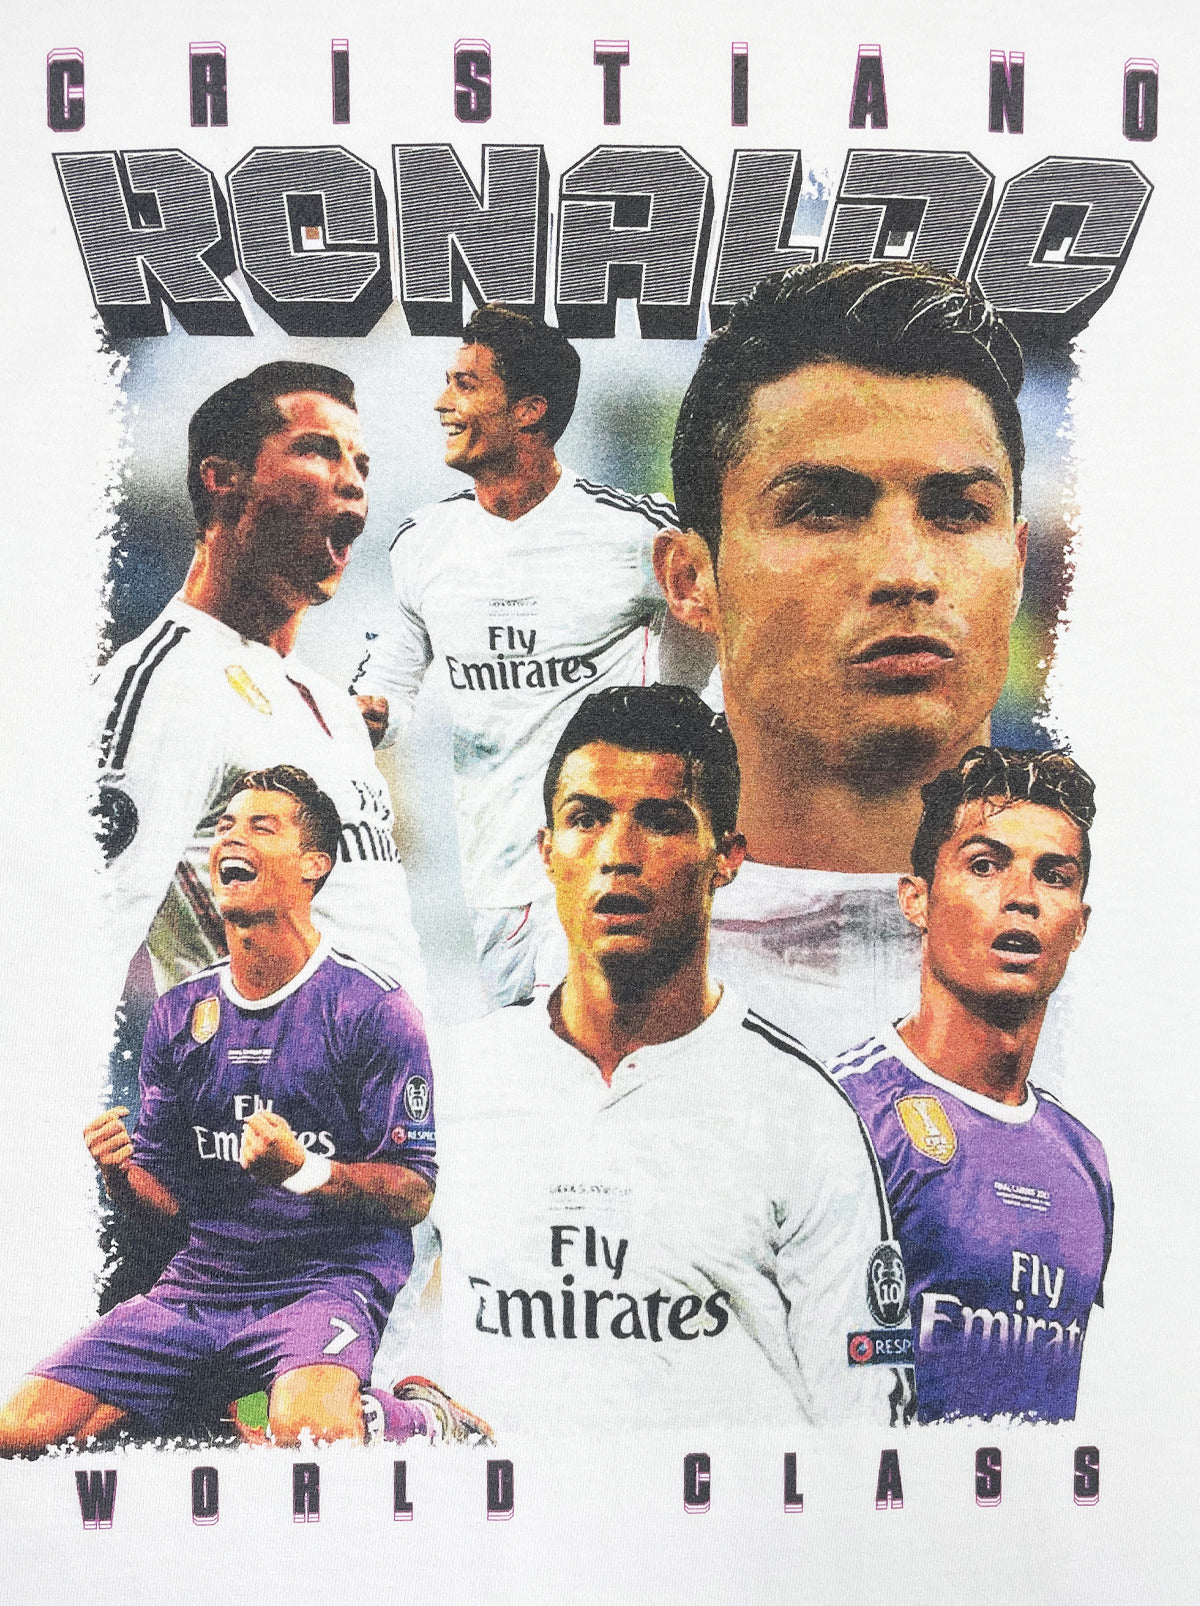 Ronaldo Madrid Jersey -  Norway